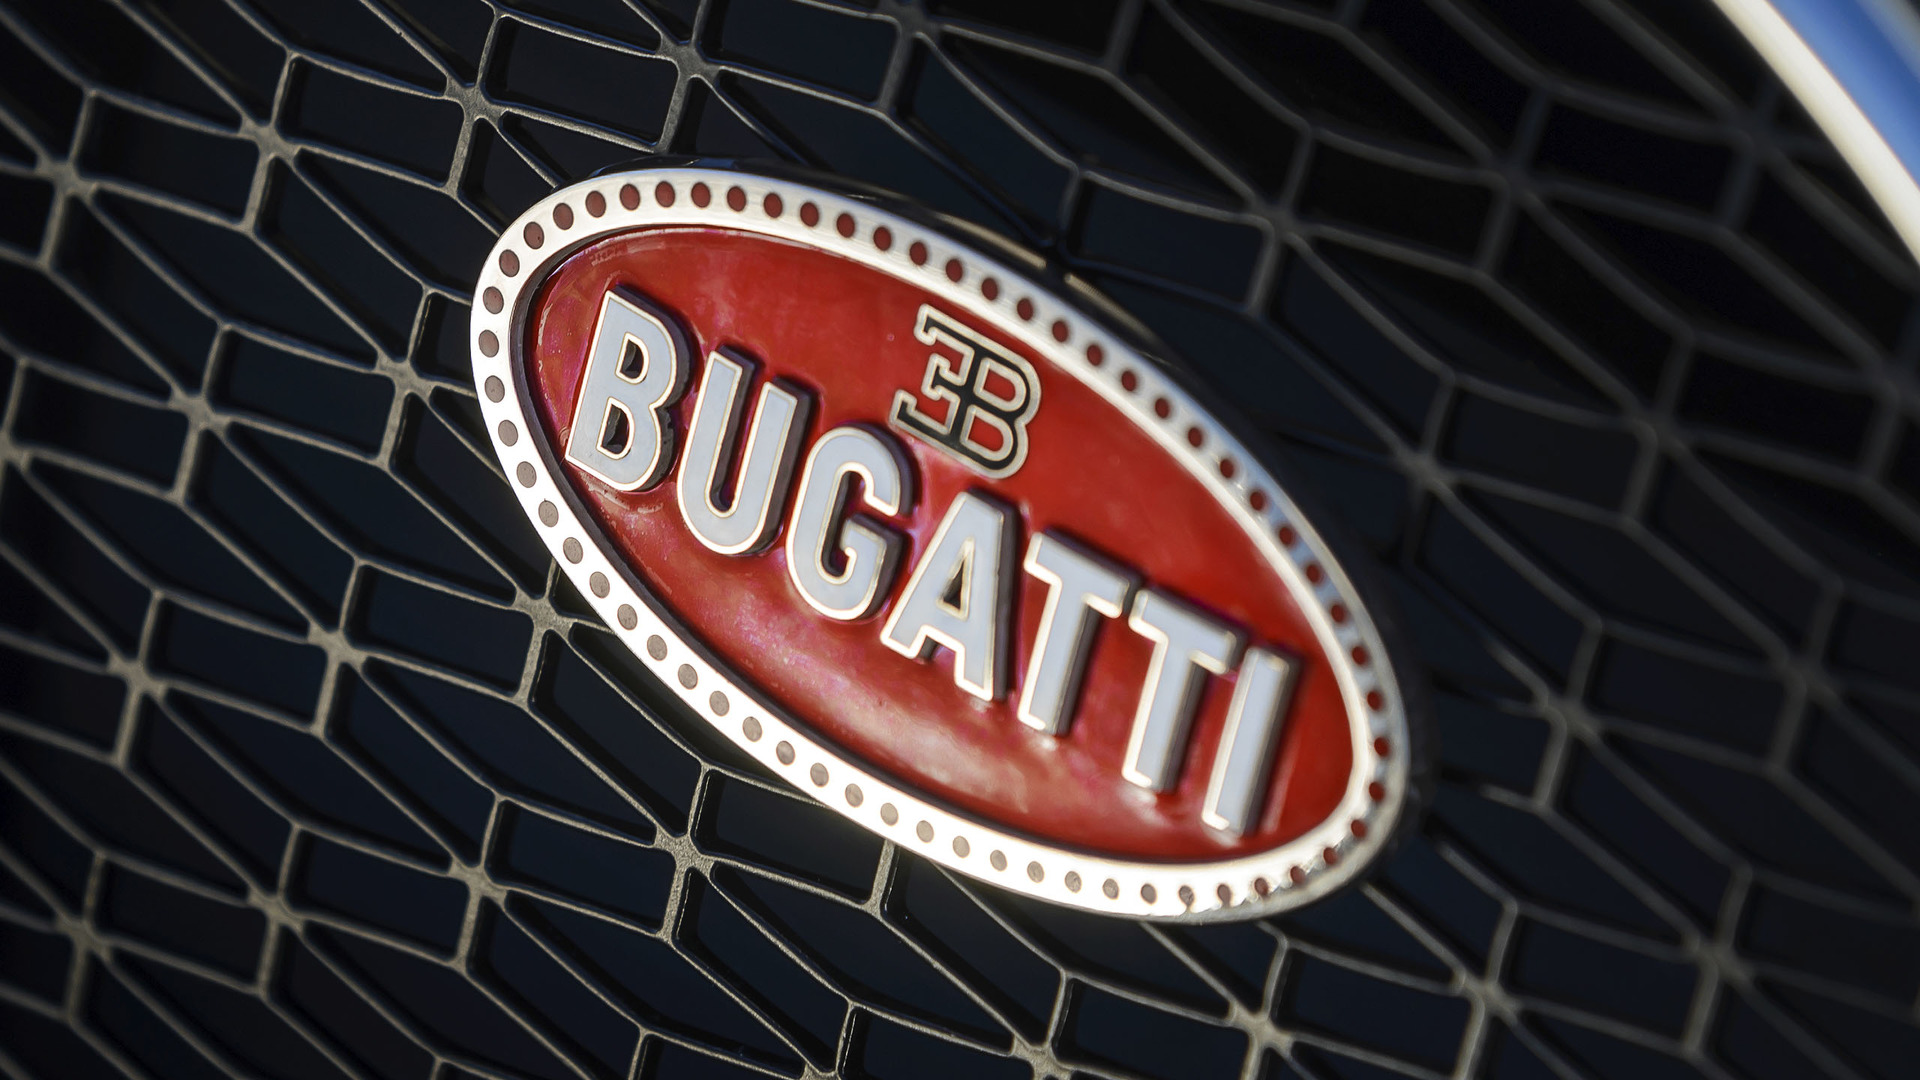 2017-bugatti-chiron-first-drive.jpg